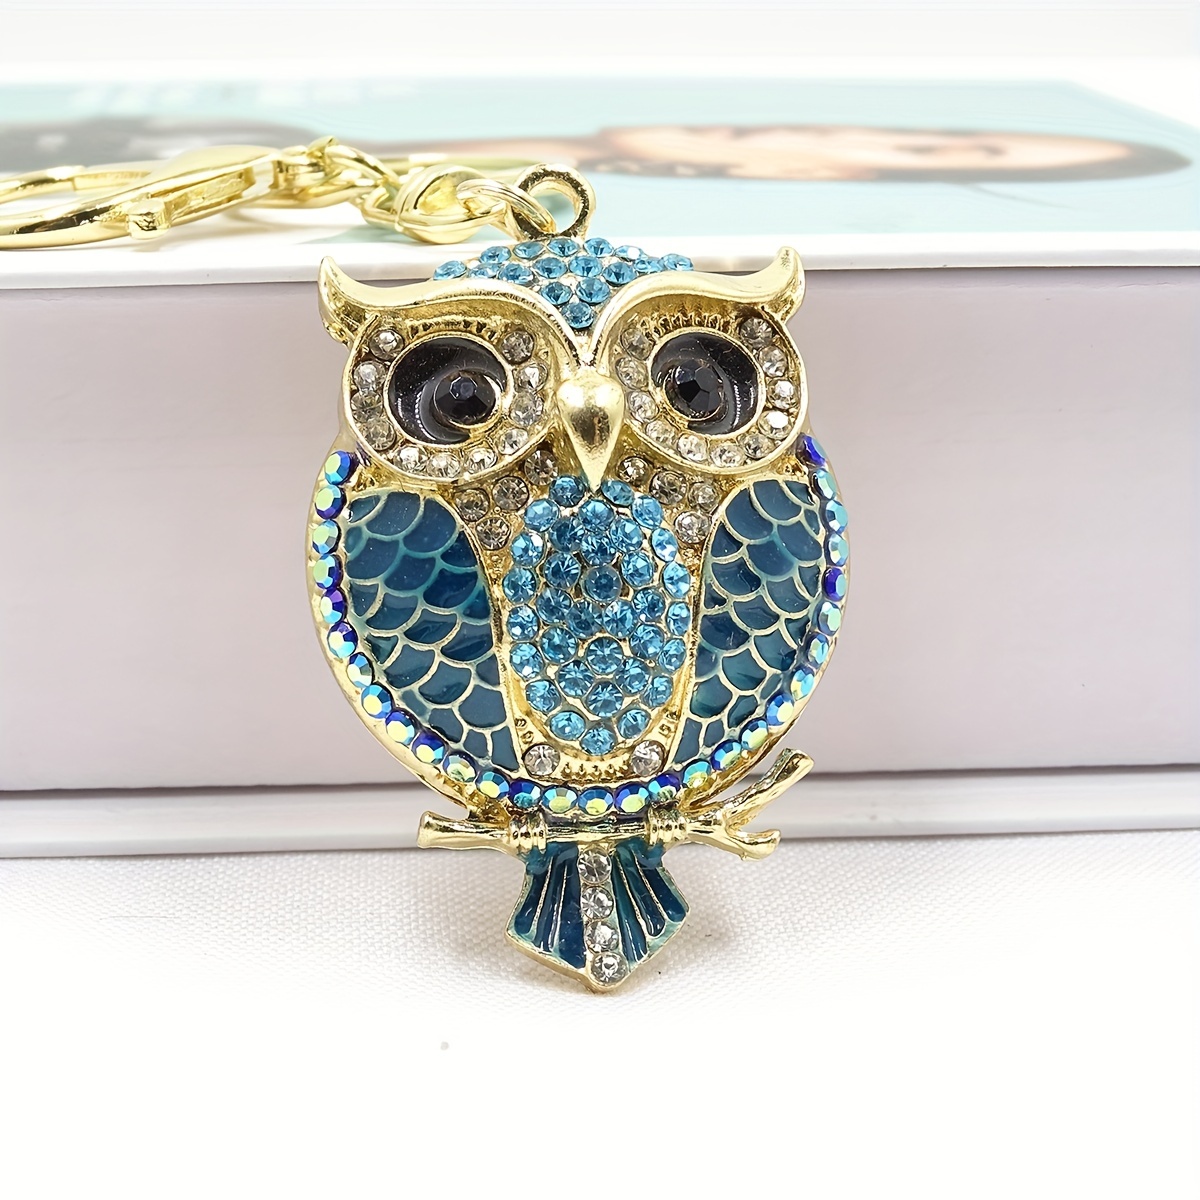 1pc Women Owl Decor Coin Purse & Tassel Charm Cute Keychain For Key  Decoration